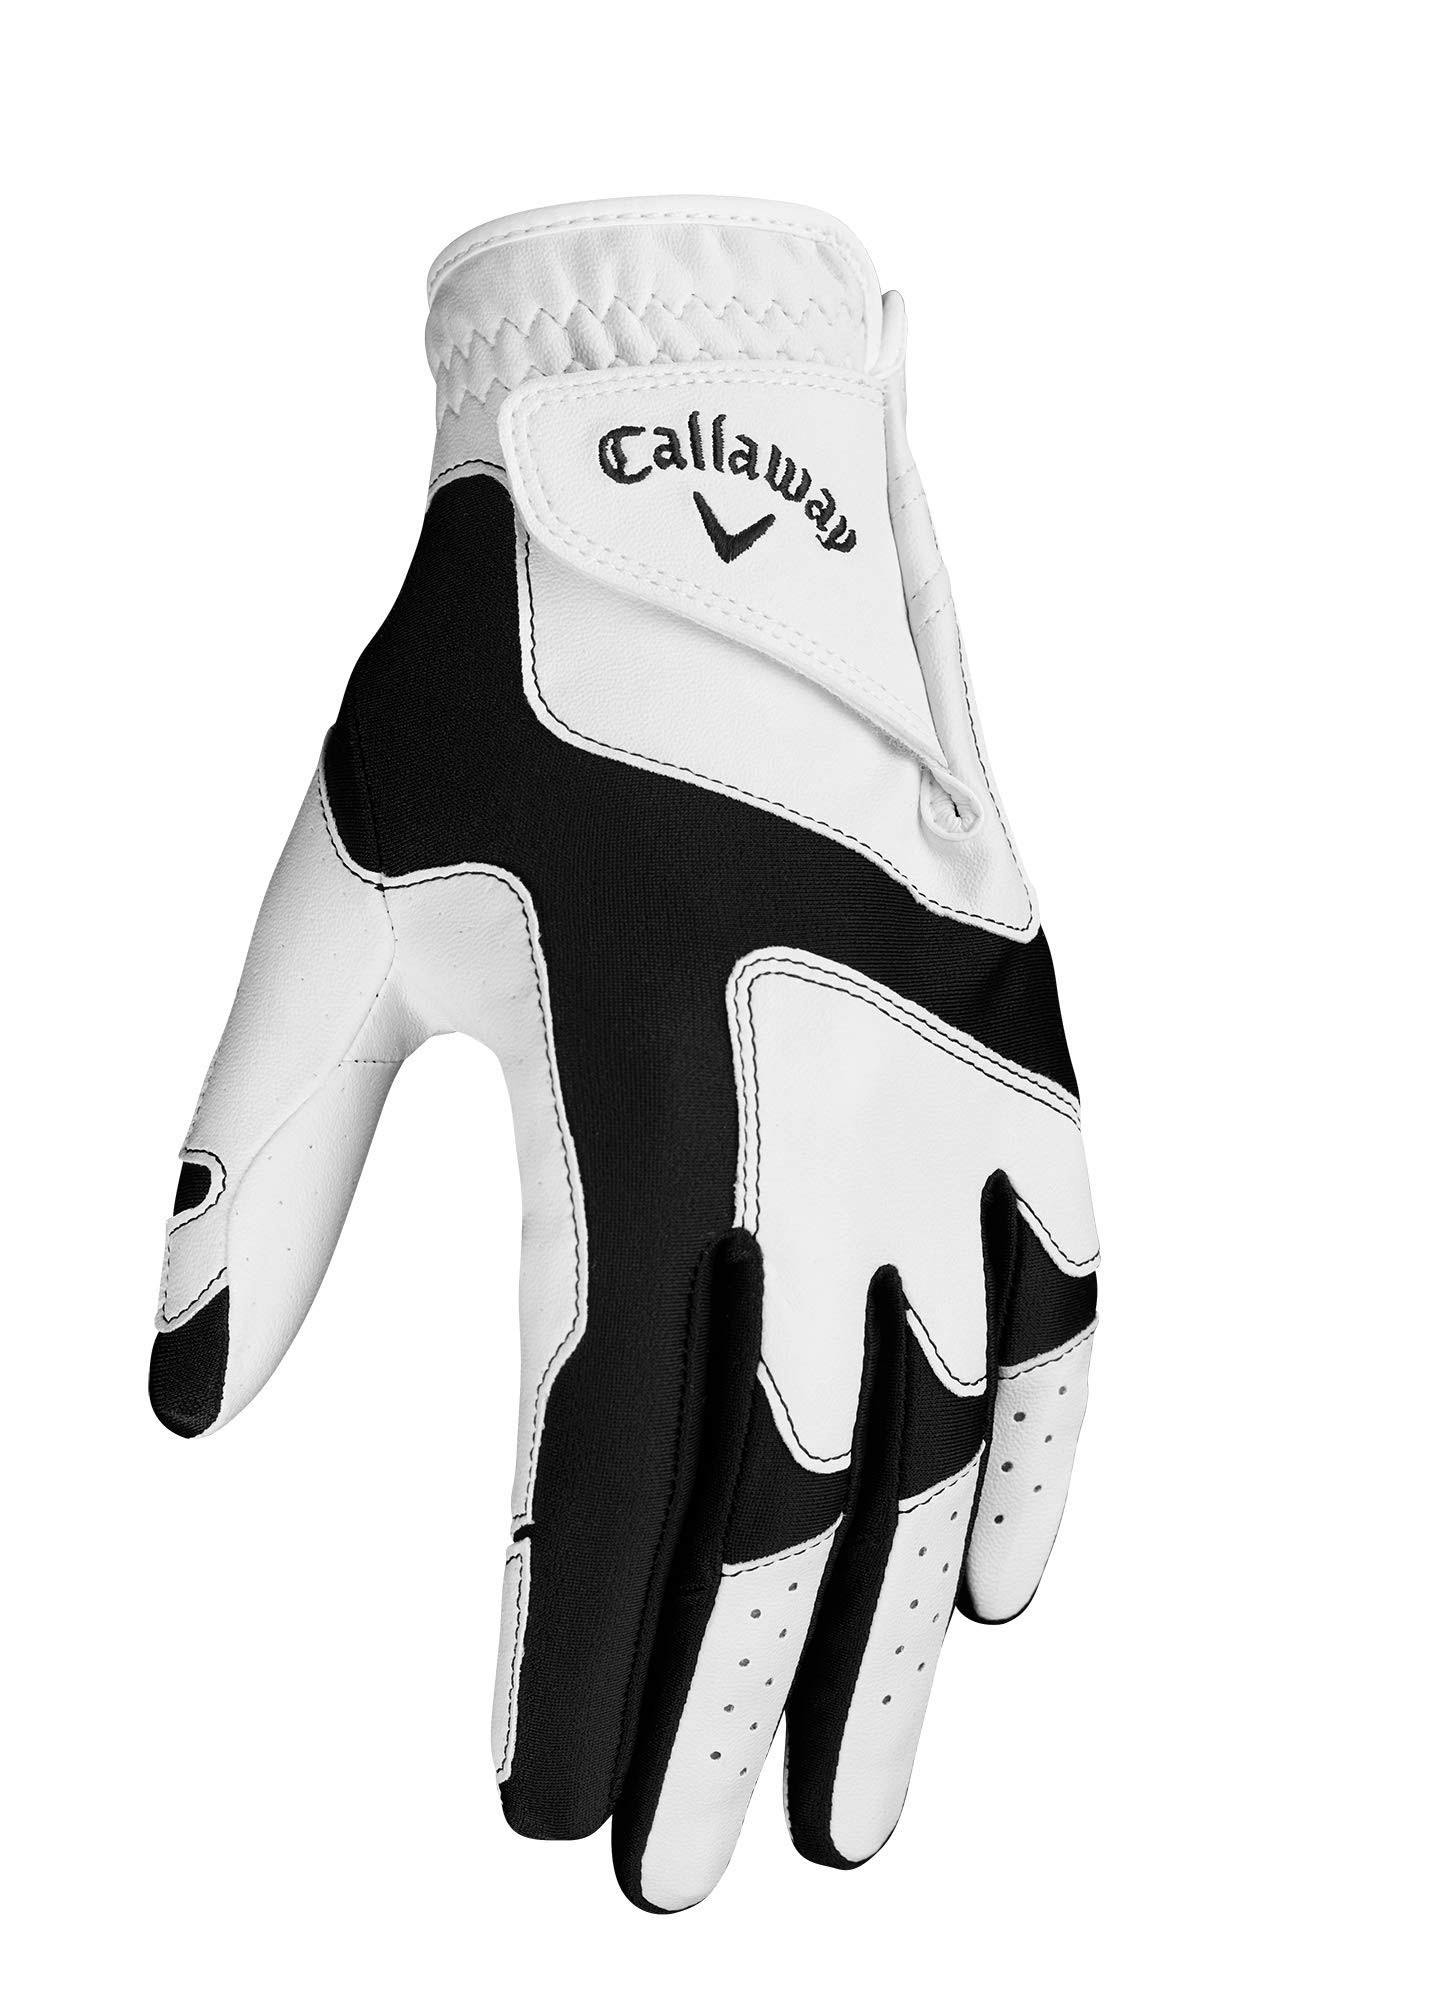 Callaway Women's Opti-Fit Golf Glove